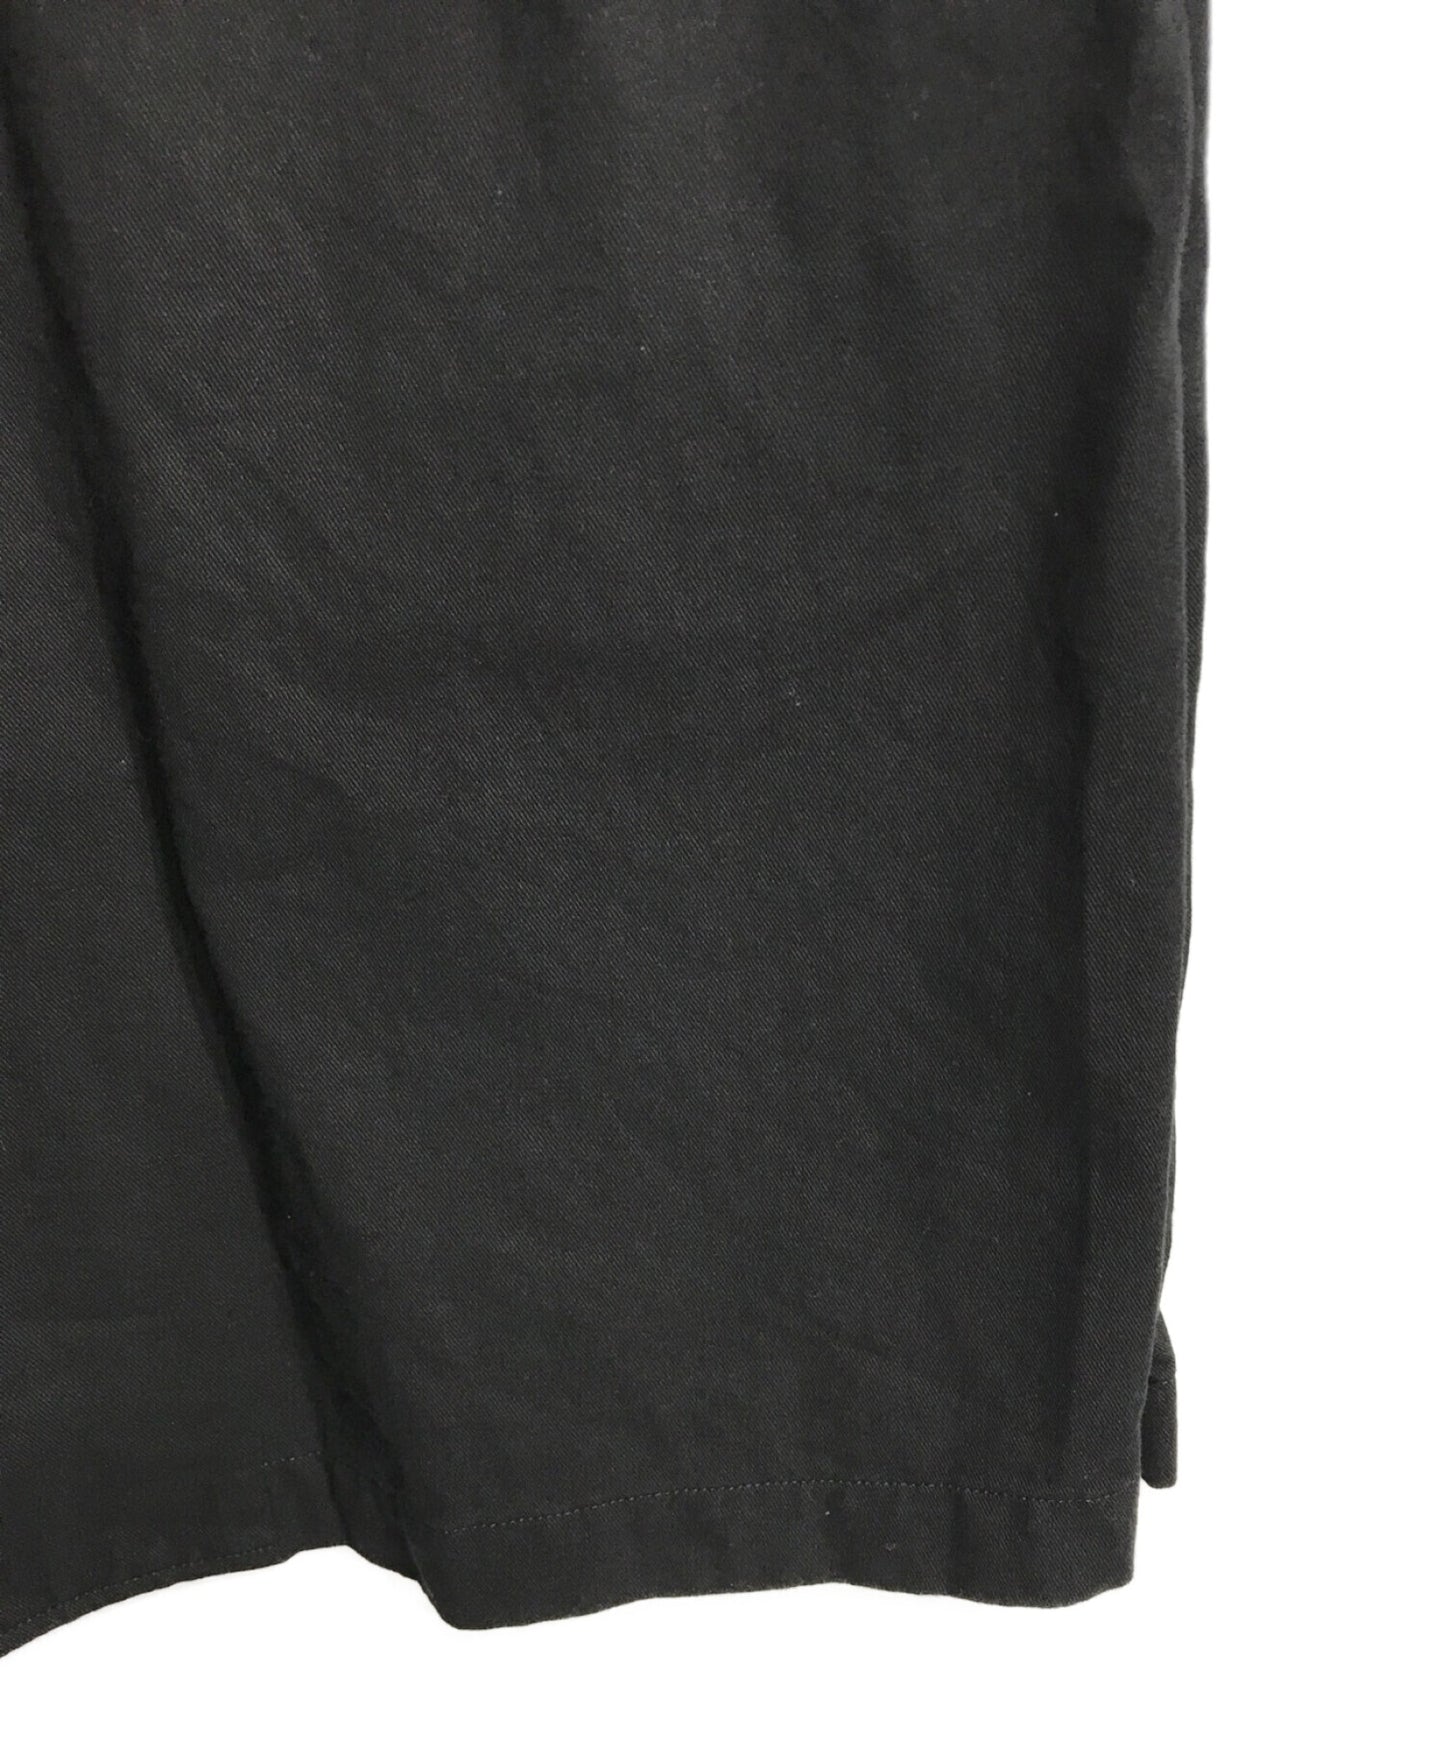 S'yte × Kuon Cotton Twill Yoshino Plaid 주름 셔츠 재킷 UM-B67-038